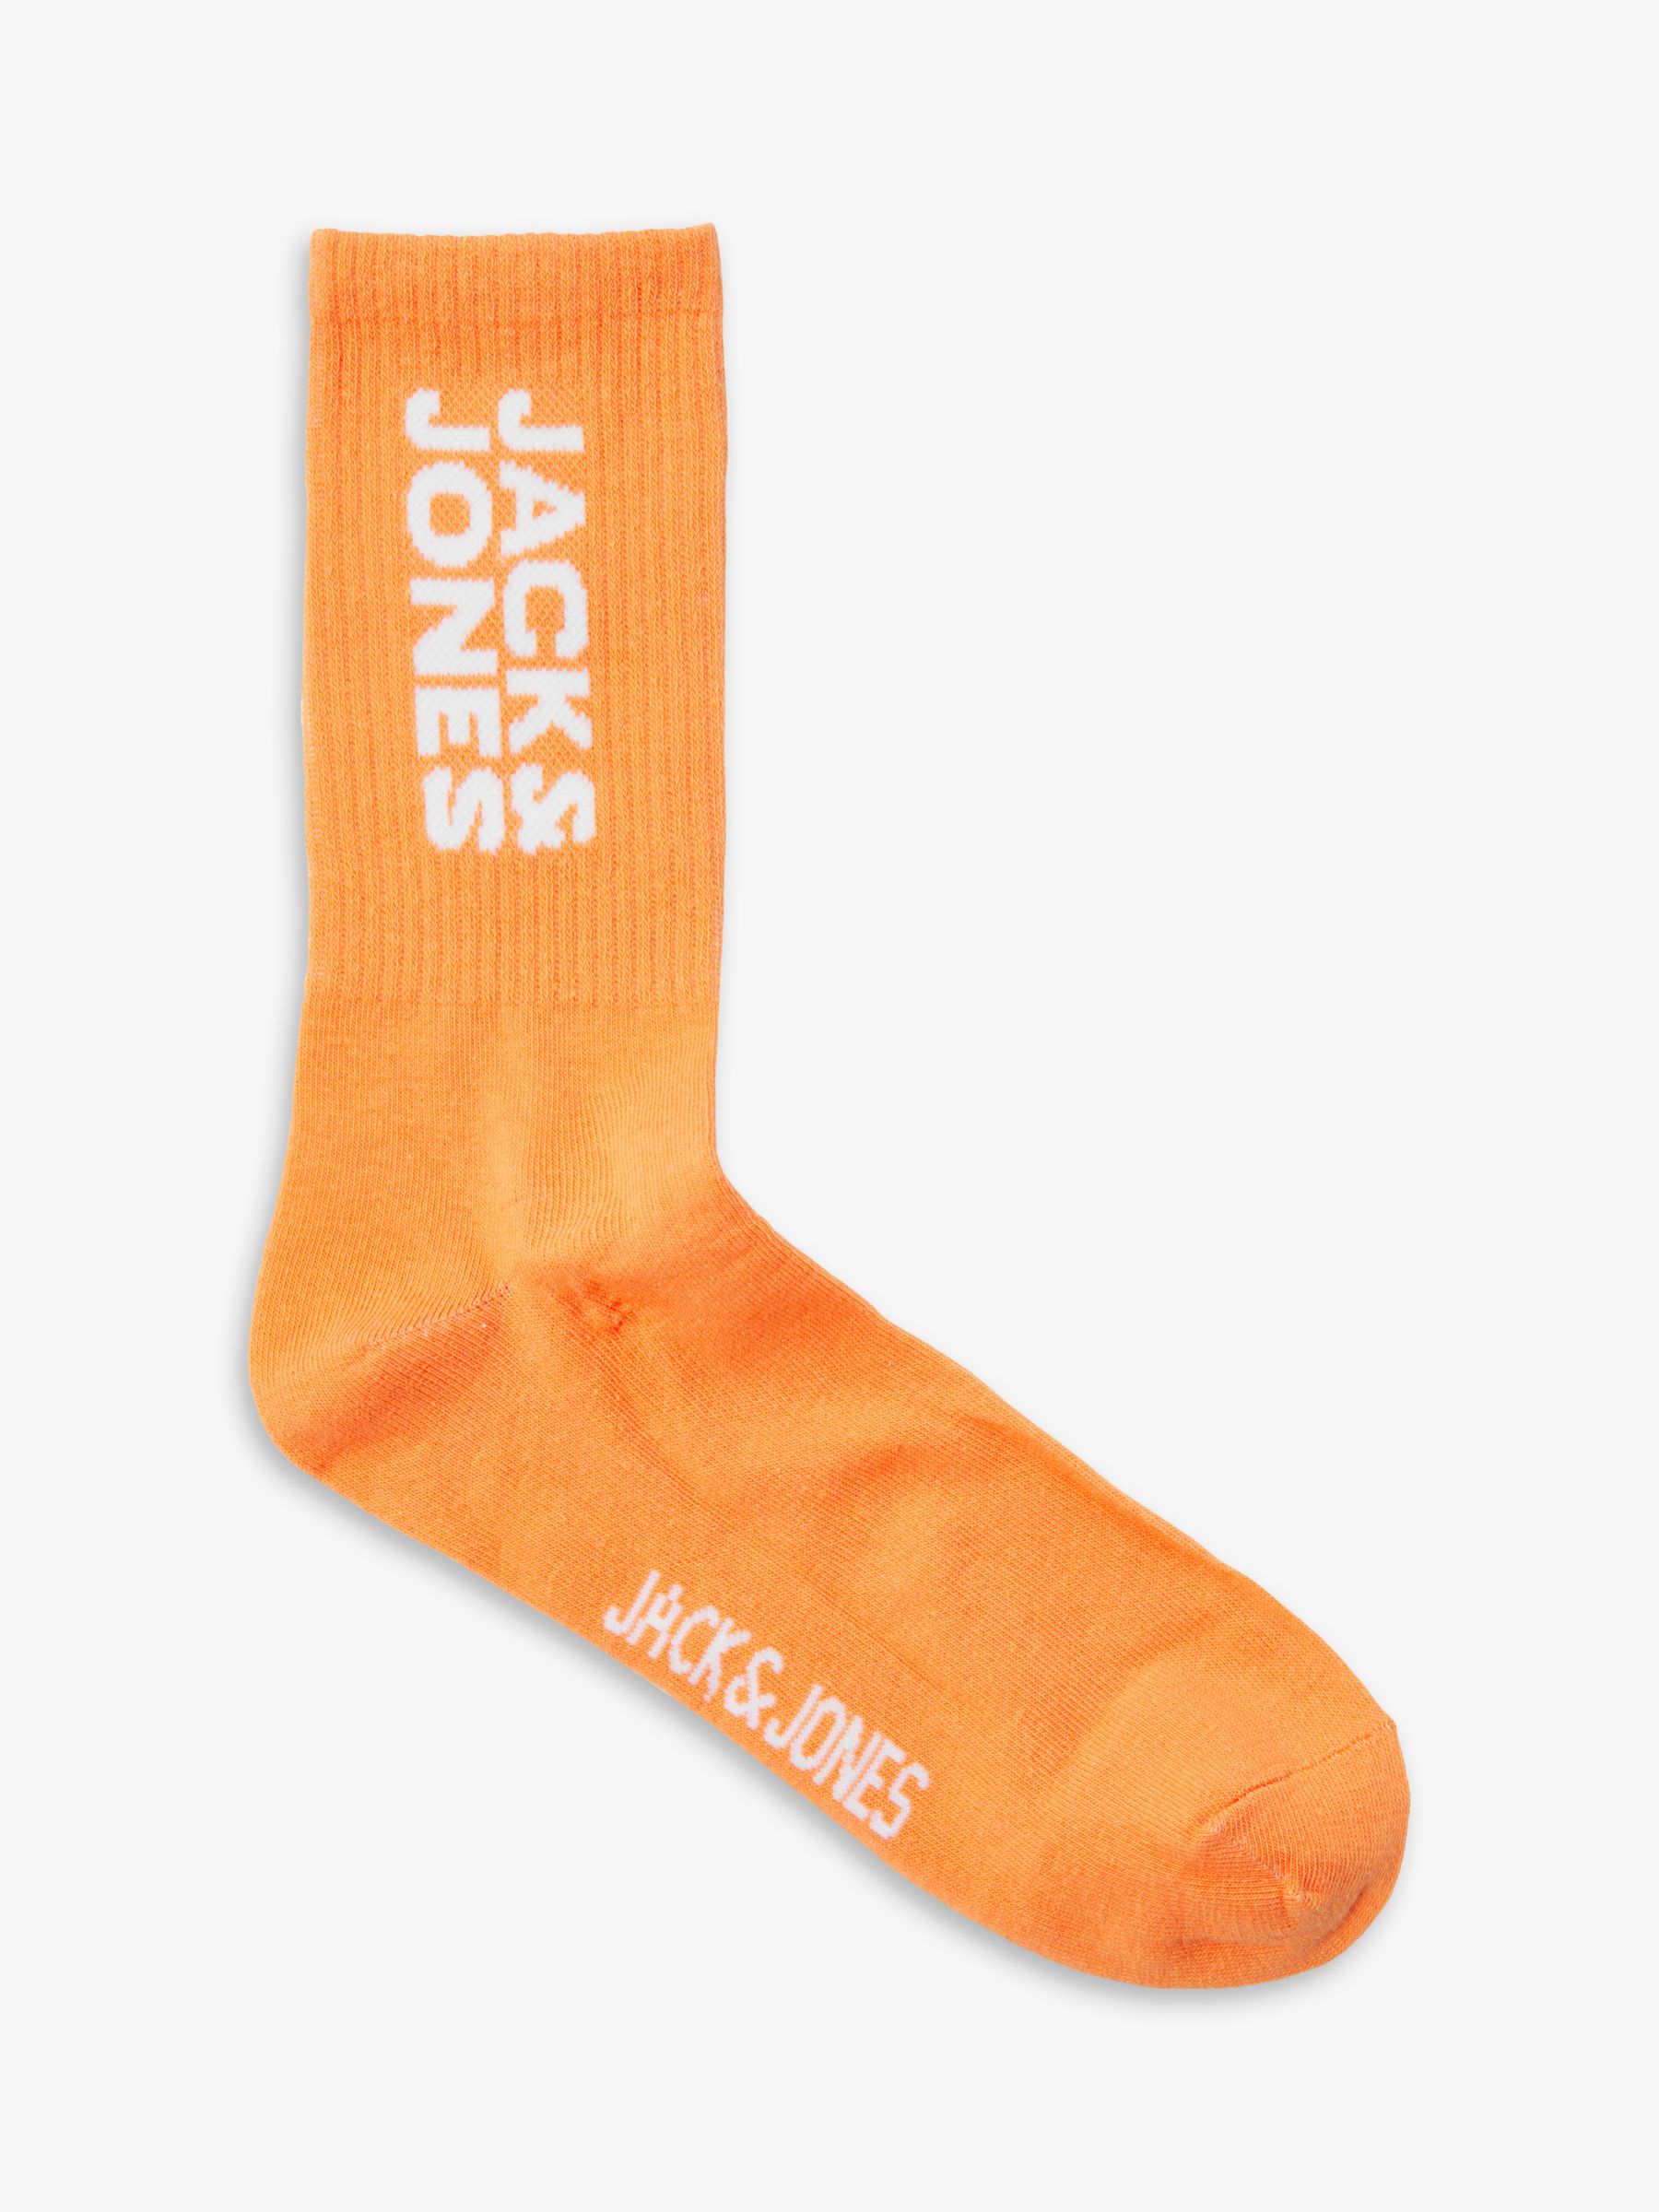 Jack & Jones Kids' Logo Sport Socks, Pack of 5, Multi, S-M